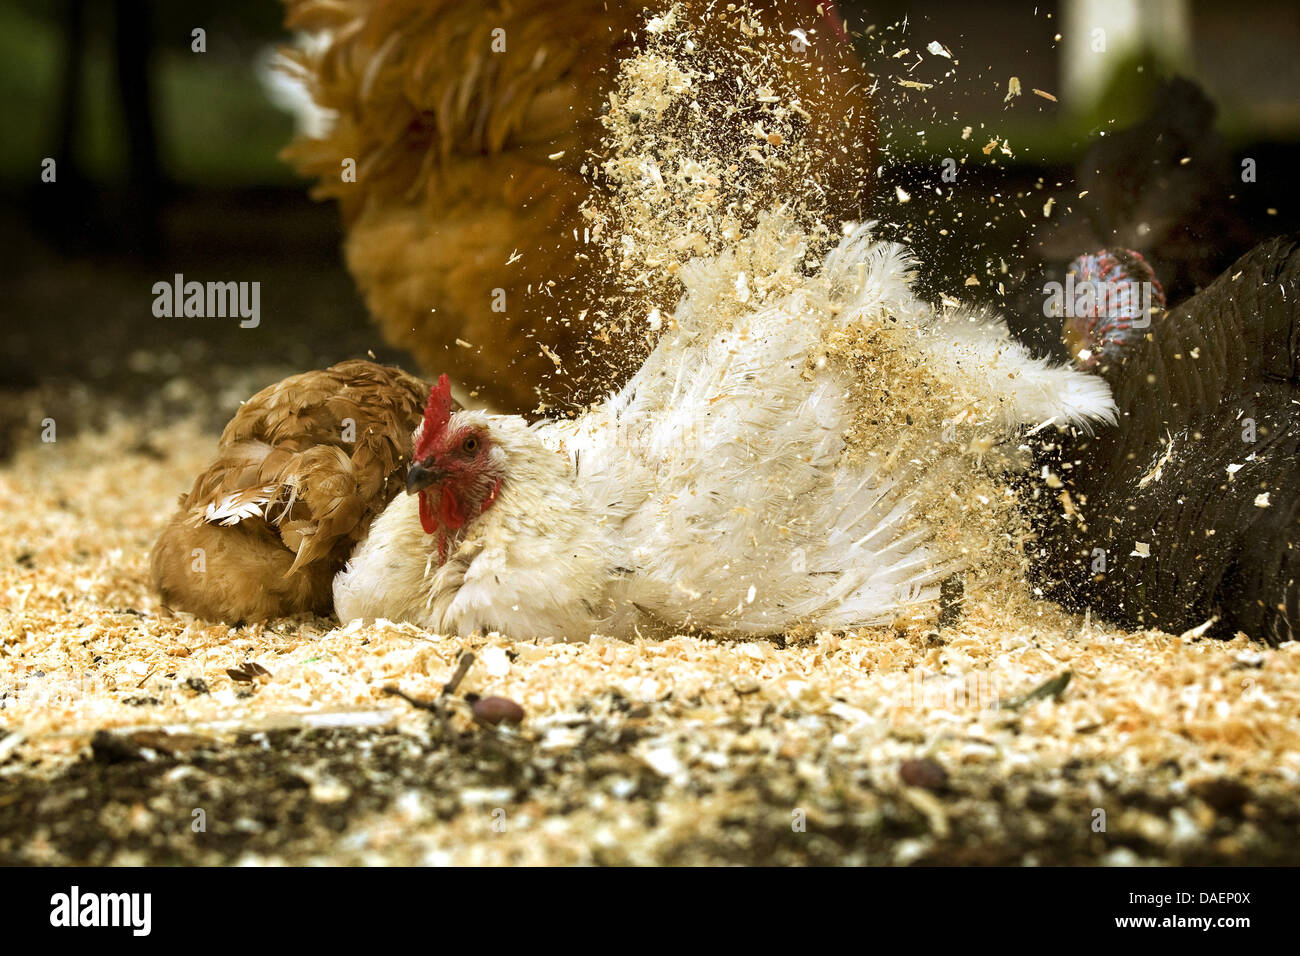 domestic fowl (Gallus gallus f. domestica), white hen at dust bath with fresh wood shavings, Germany Stock Photo